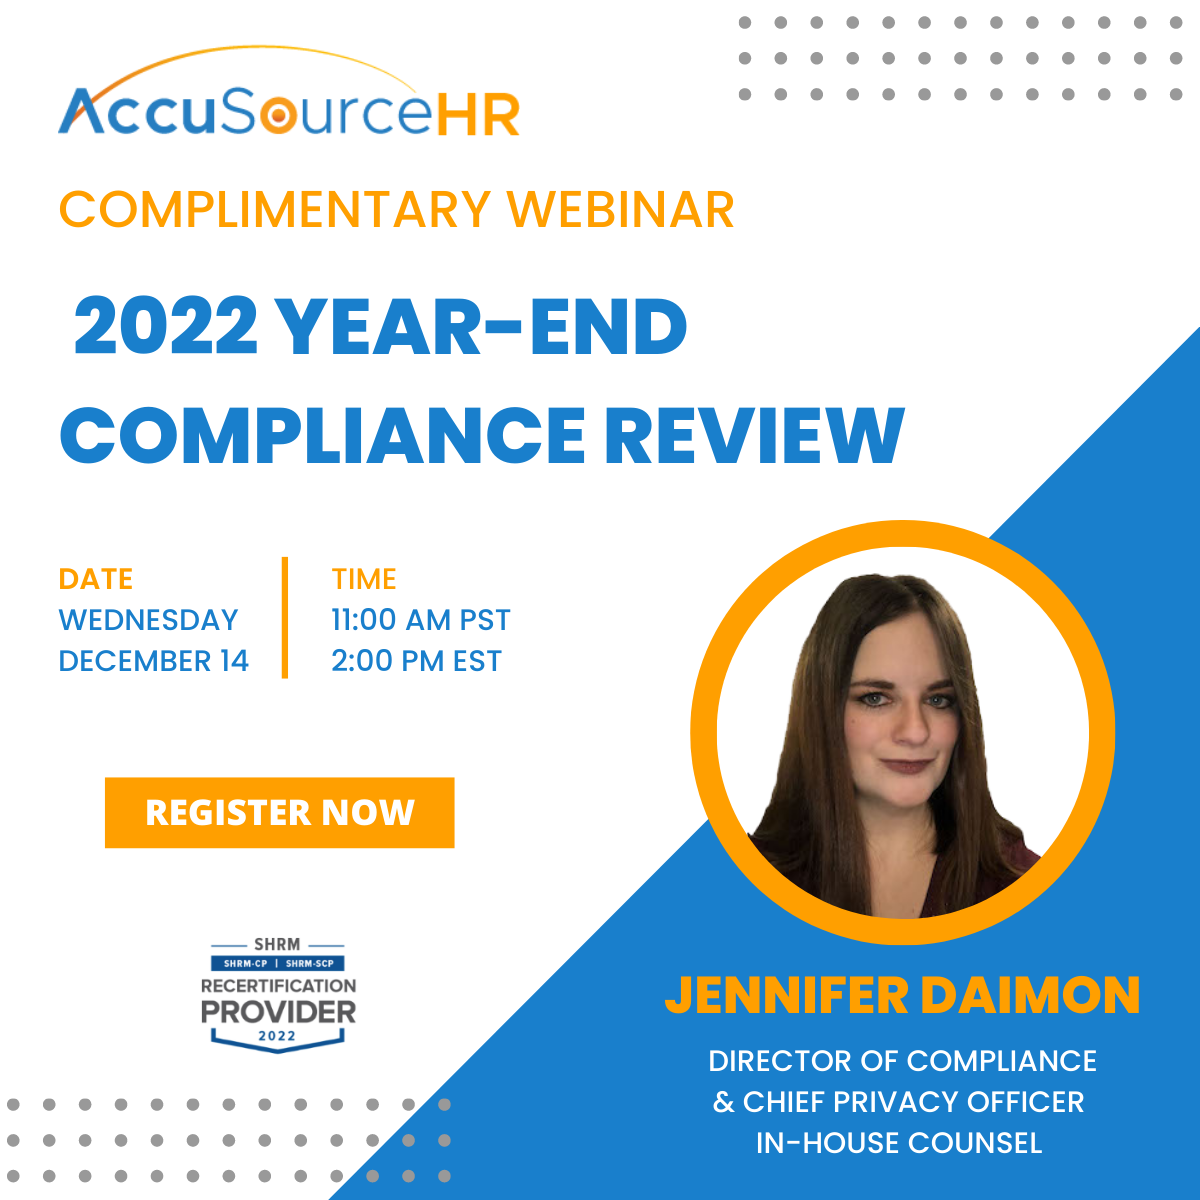 AccuSourceHR's 2022 Year-End Compliance Update